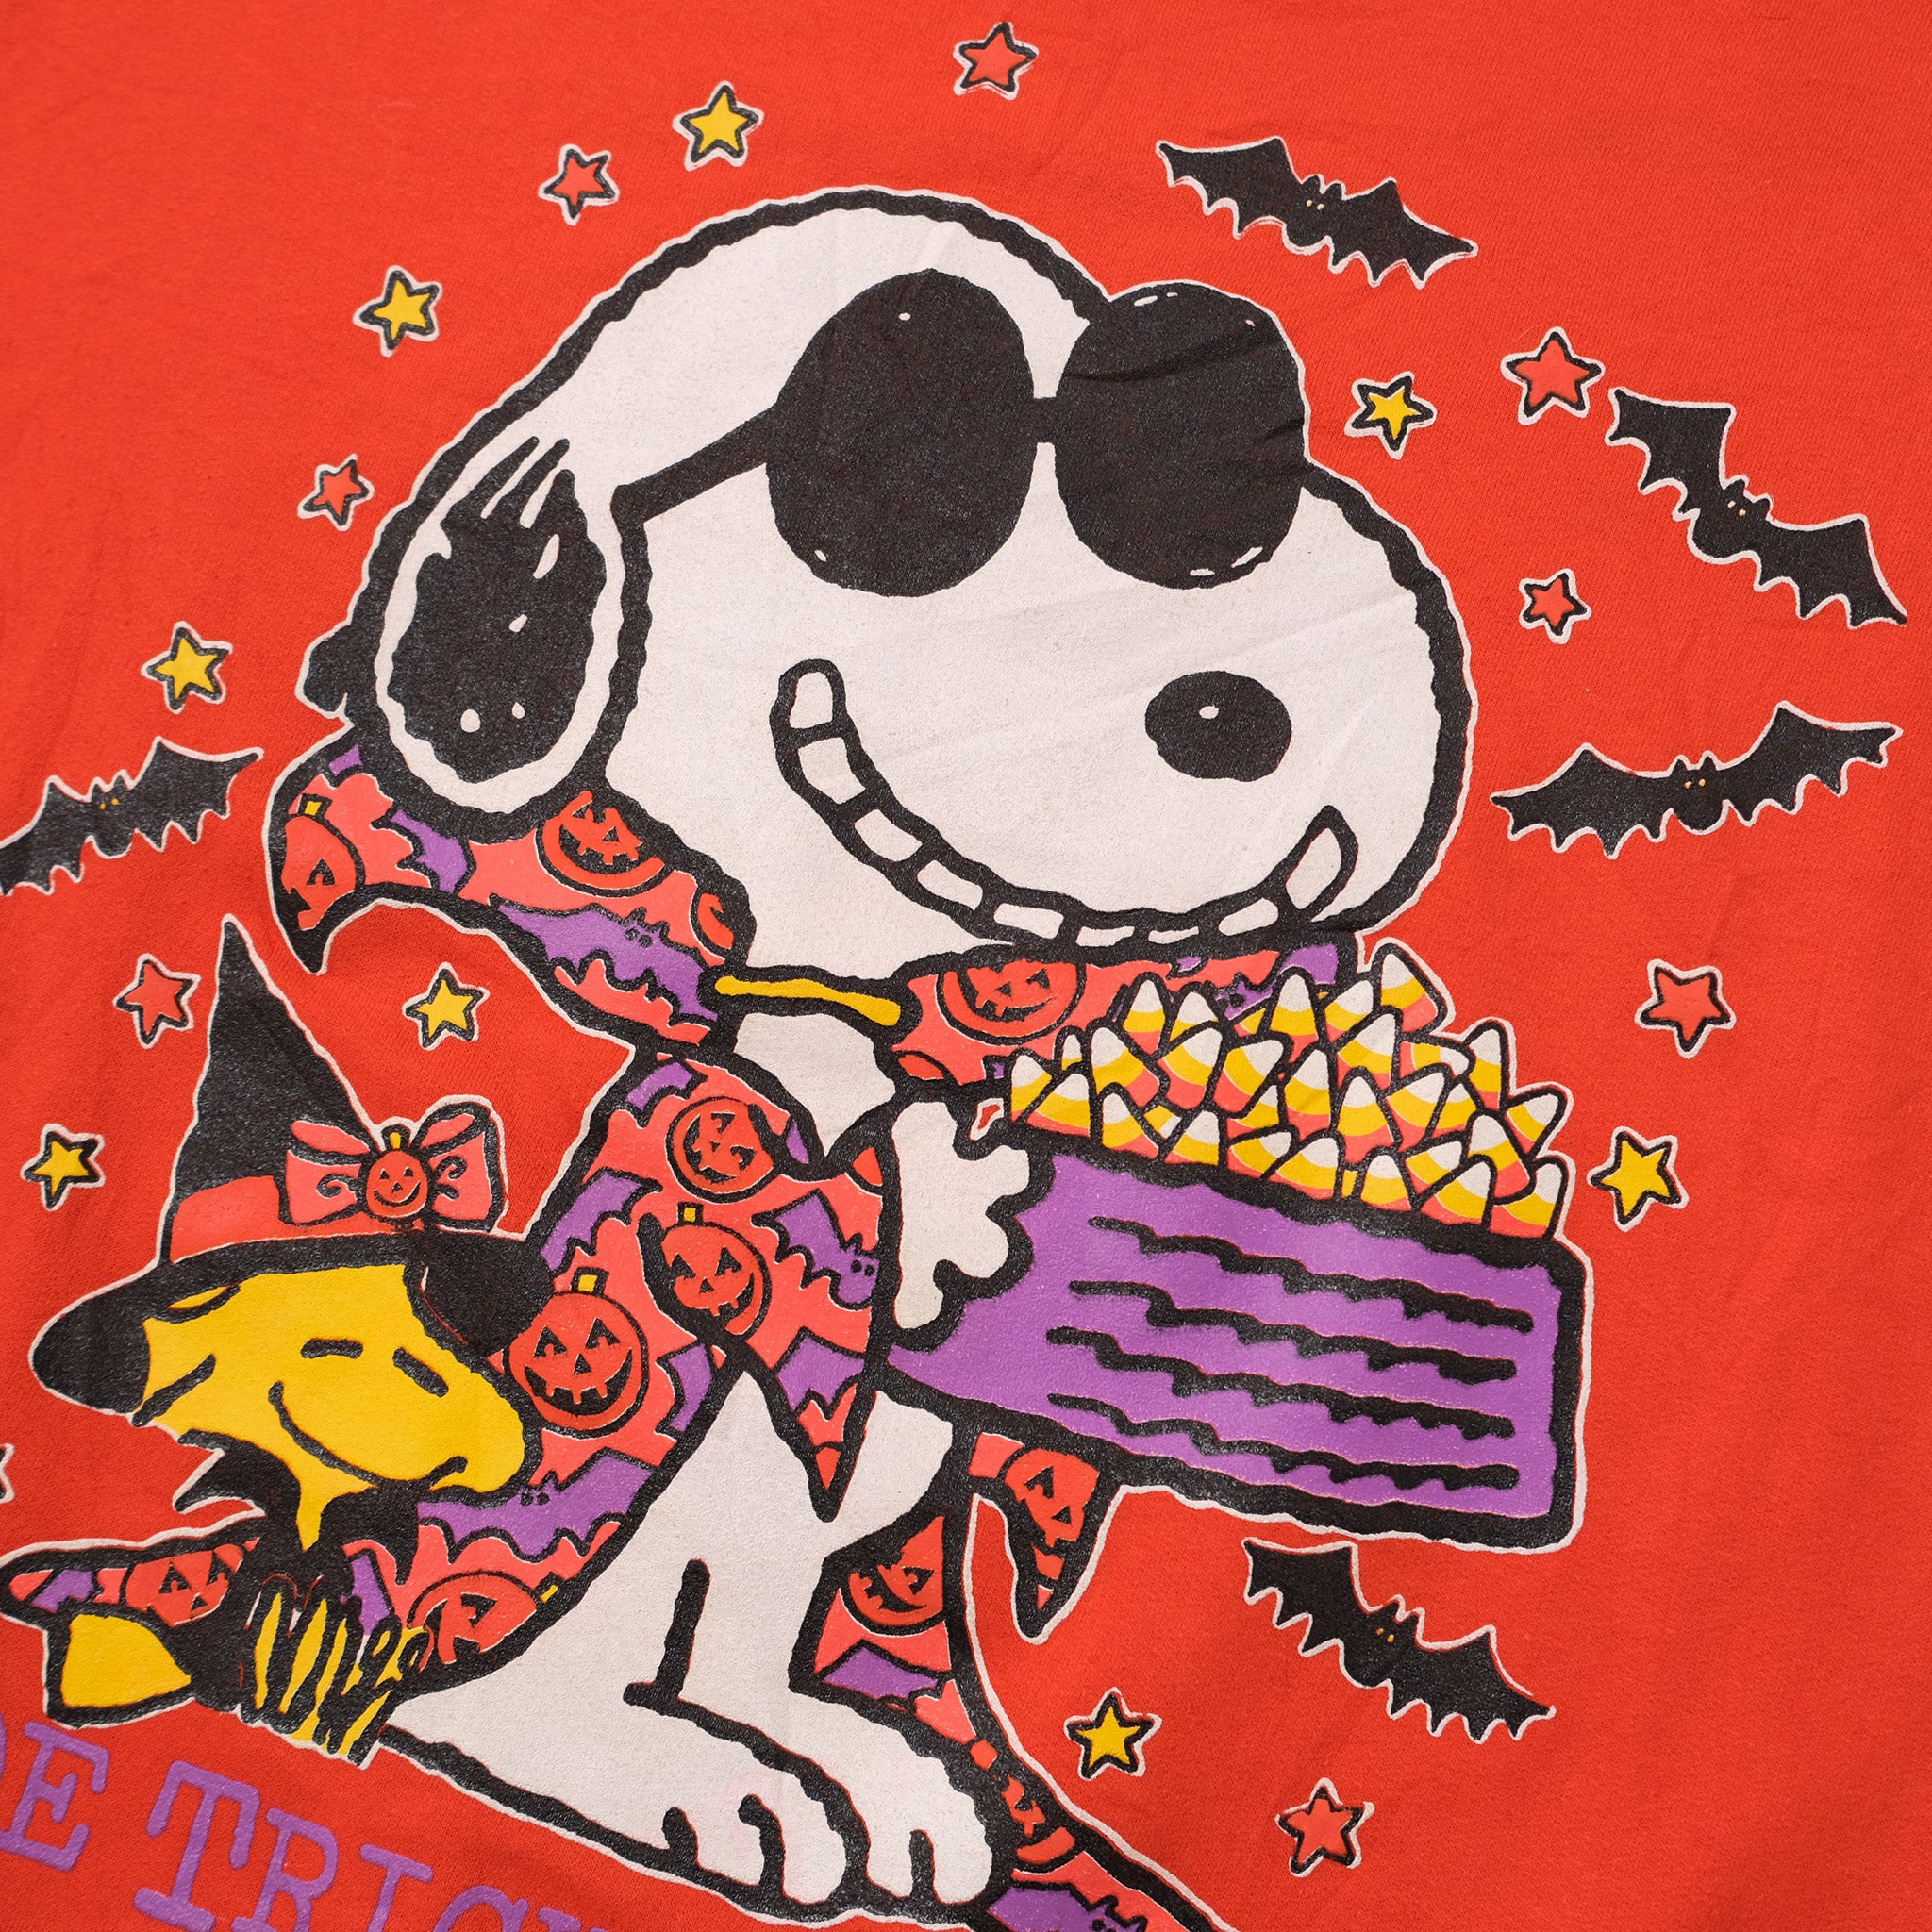 Rare Vintage Snoopy Fleece Sweatshirt / Cartoon Snoopy 90s / Jumper /  Pullover / Sportswear / Medium 